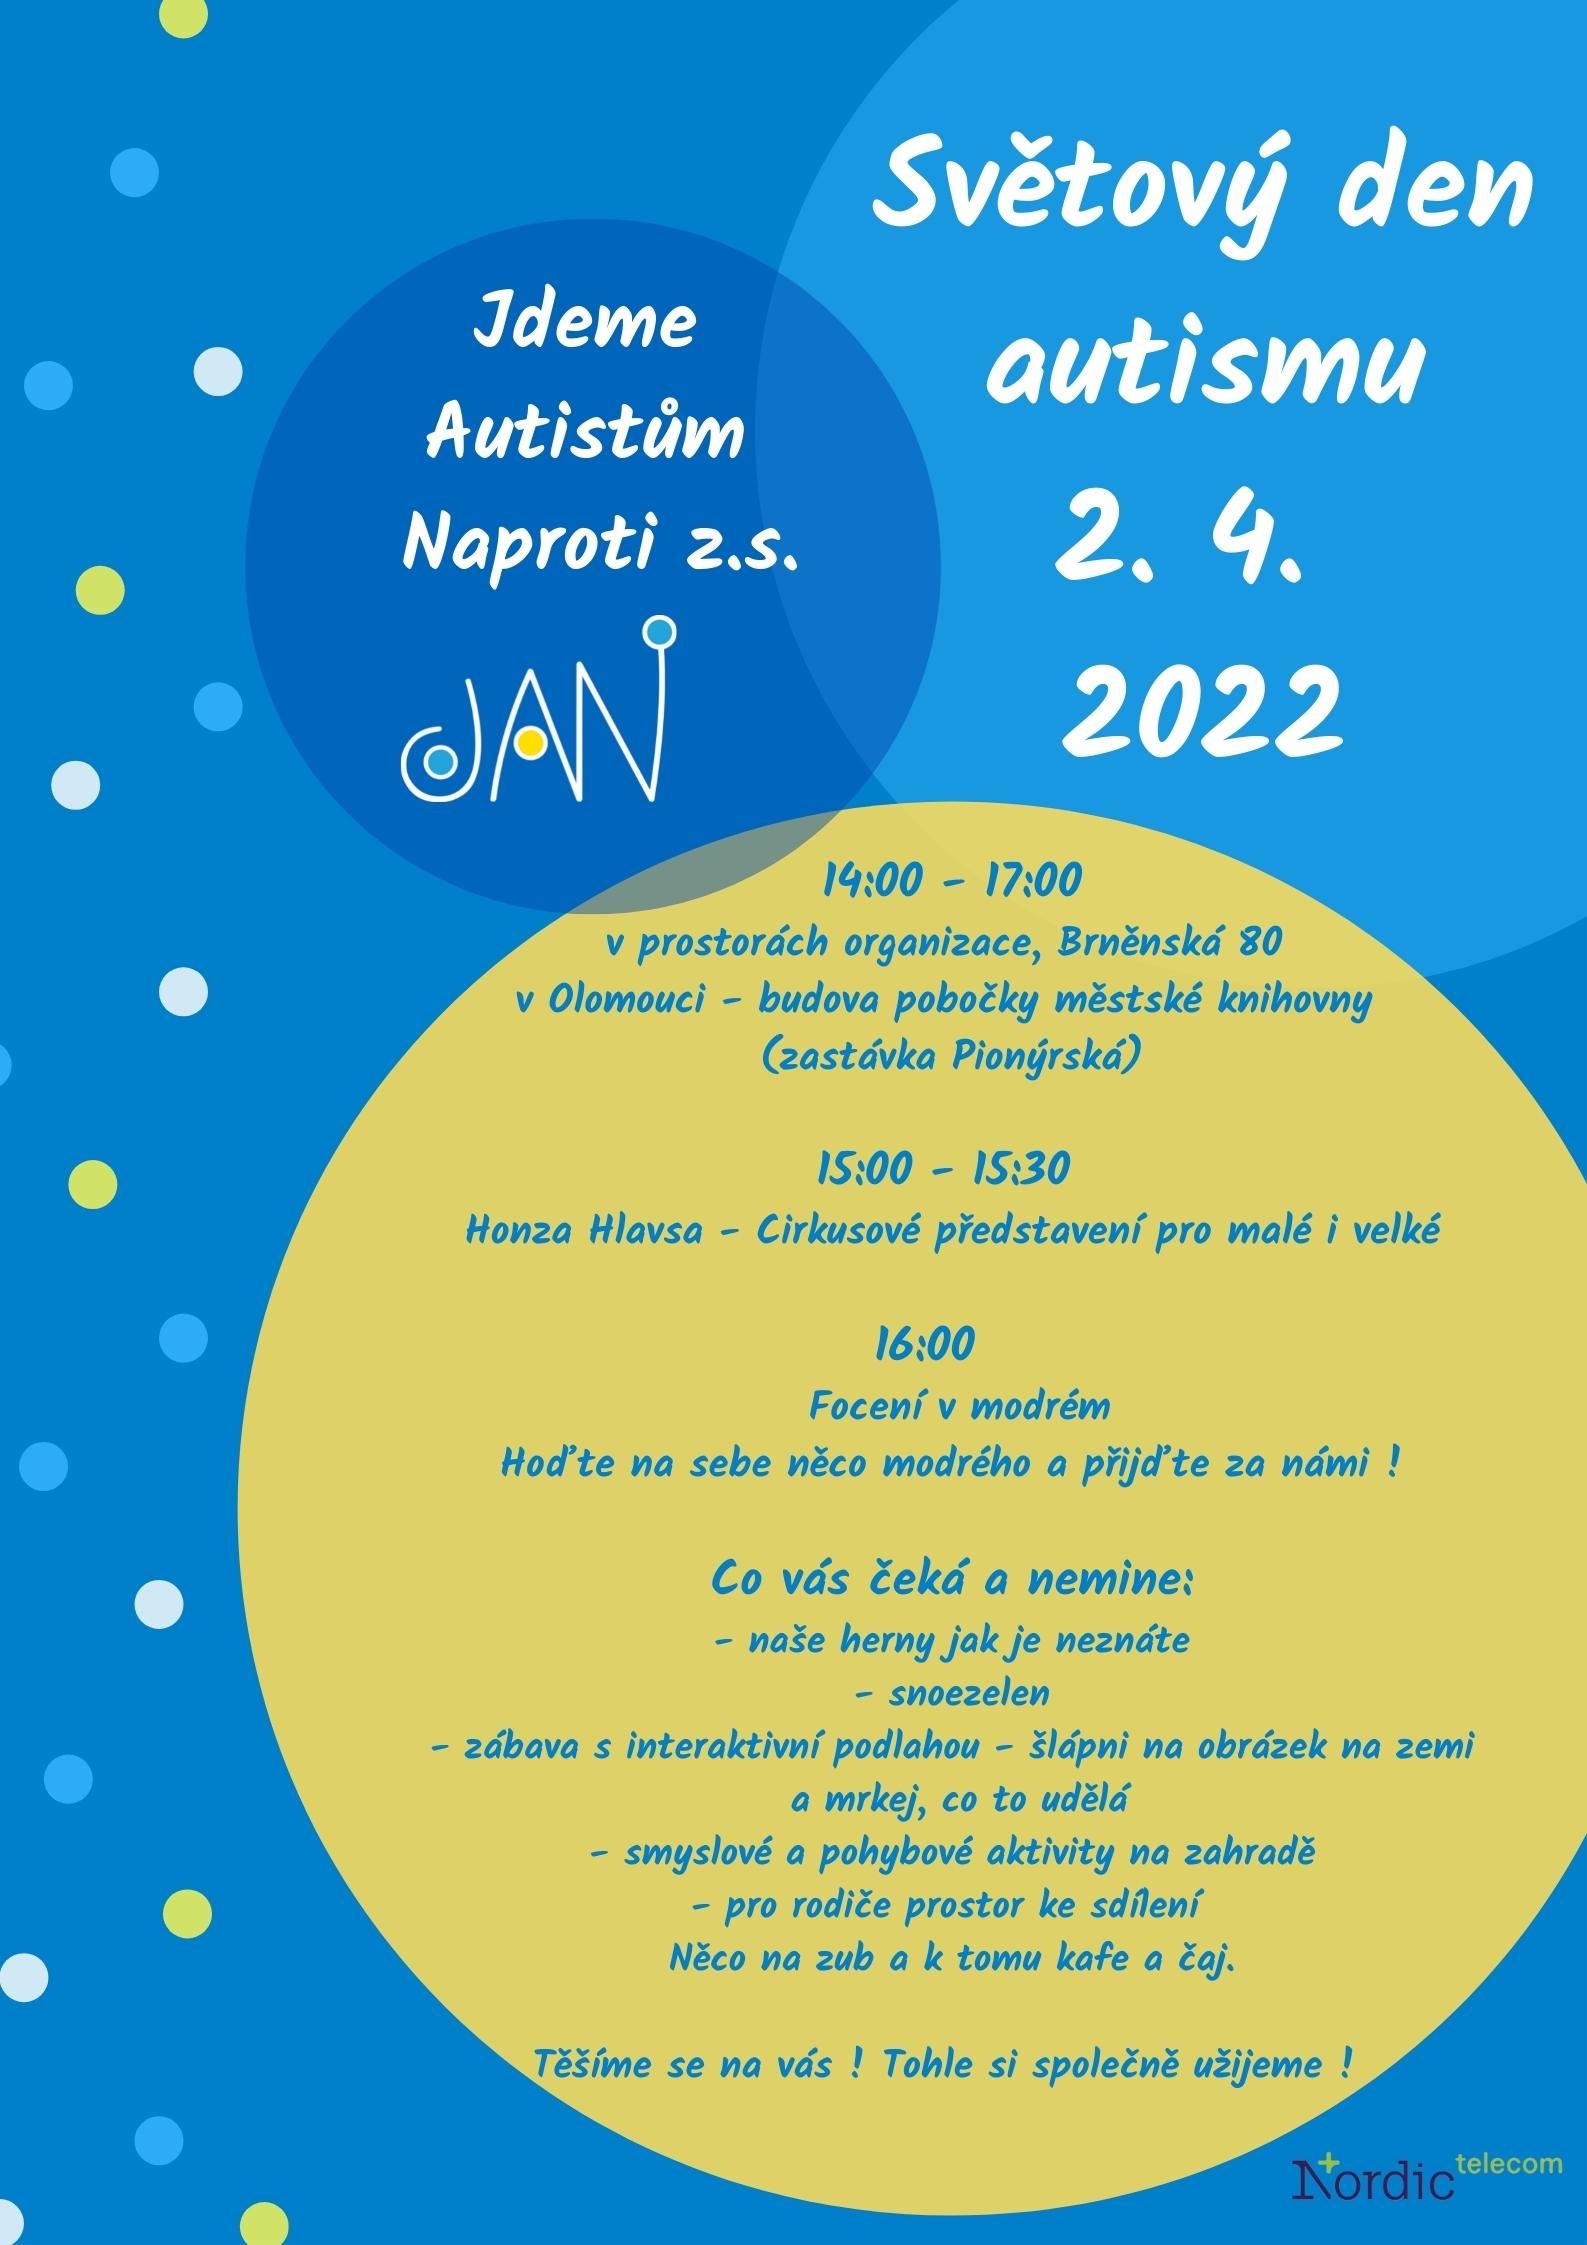 Svetovy-den-autismu-2-4-2022-jdeme-autistum-naproti-z-s-